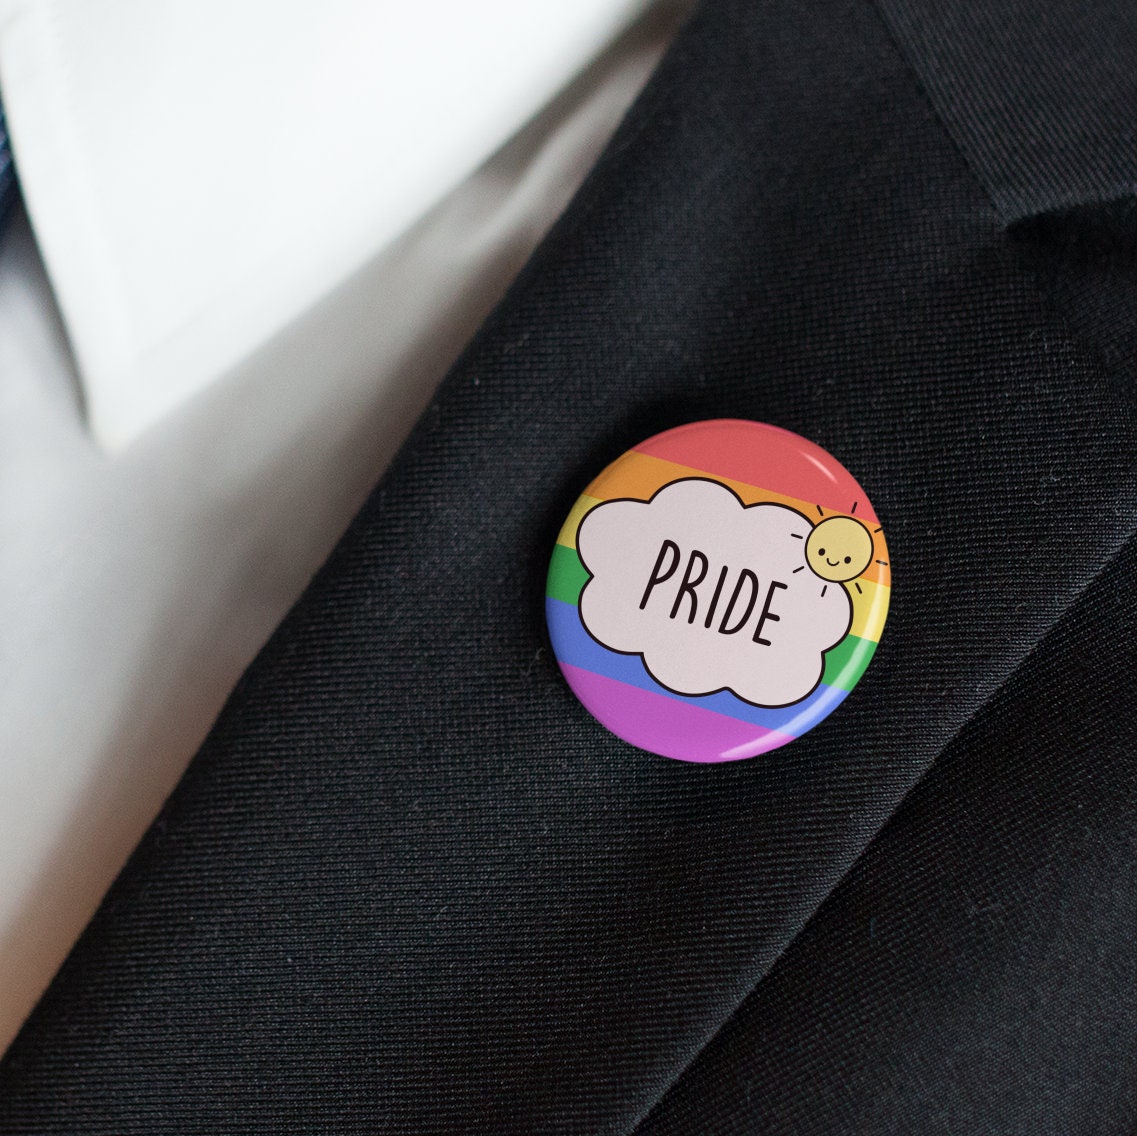 Pride Bubble Pin Badge | Rainbow Flag - LGBTG - Love is Love - Born This Gay